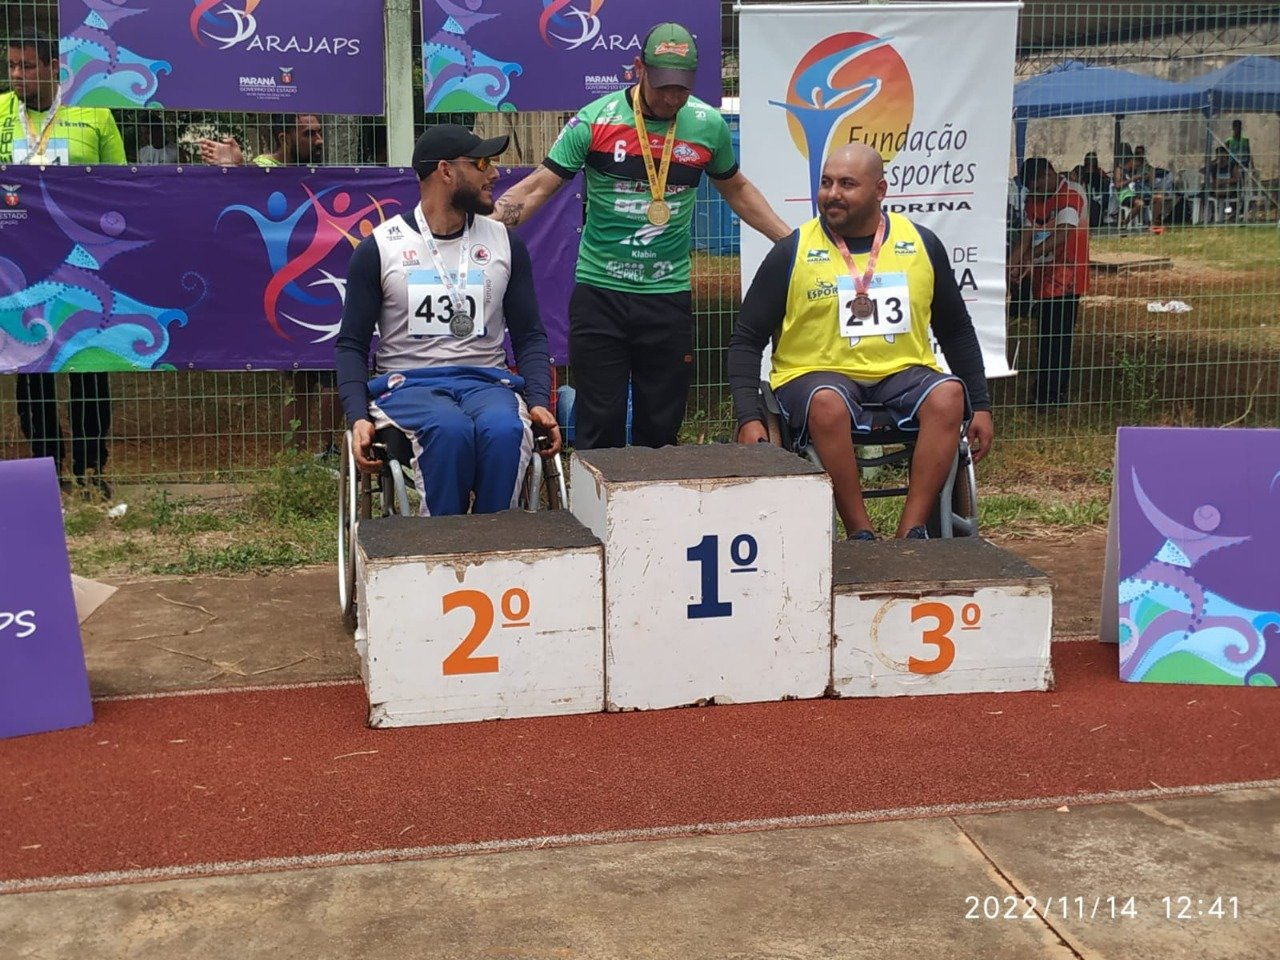 Arapongas conquista quatro medalhas no Parajaps